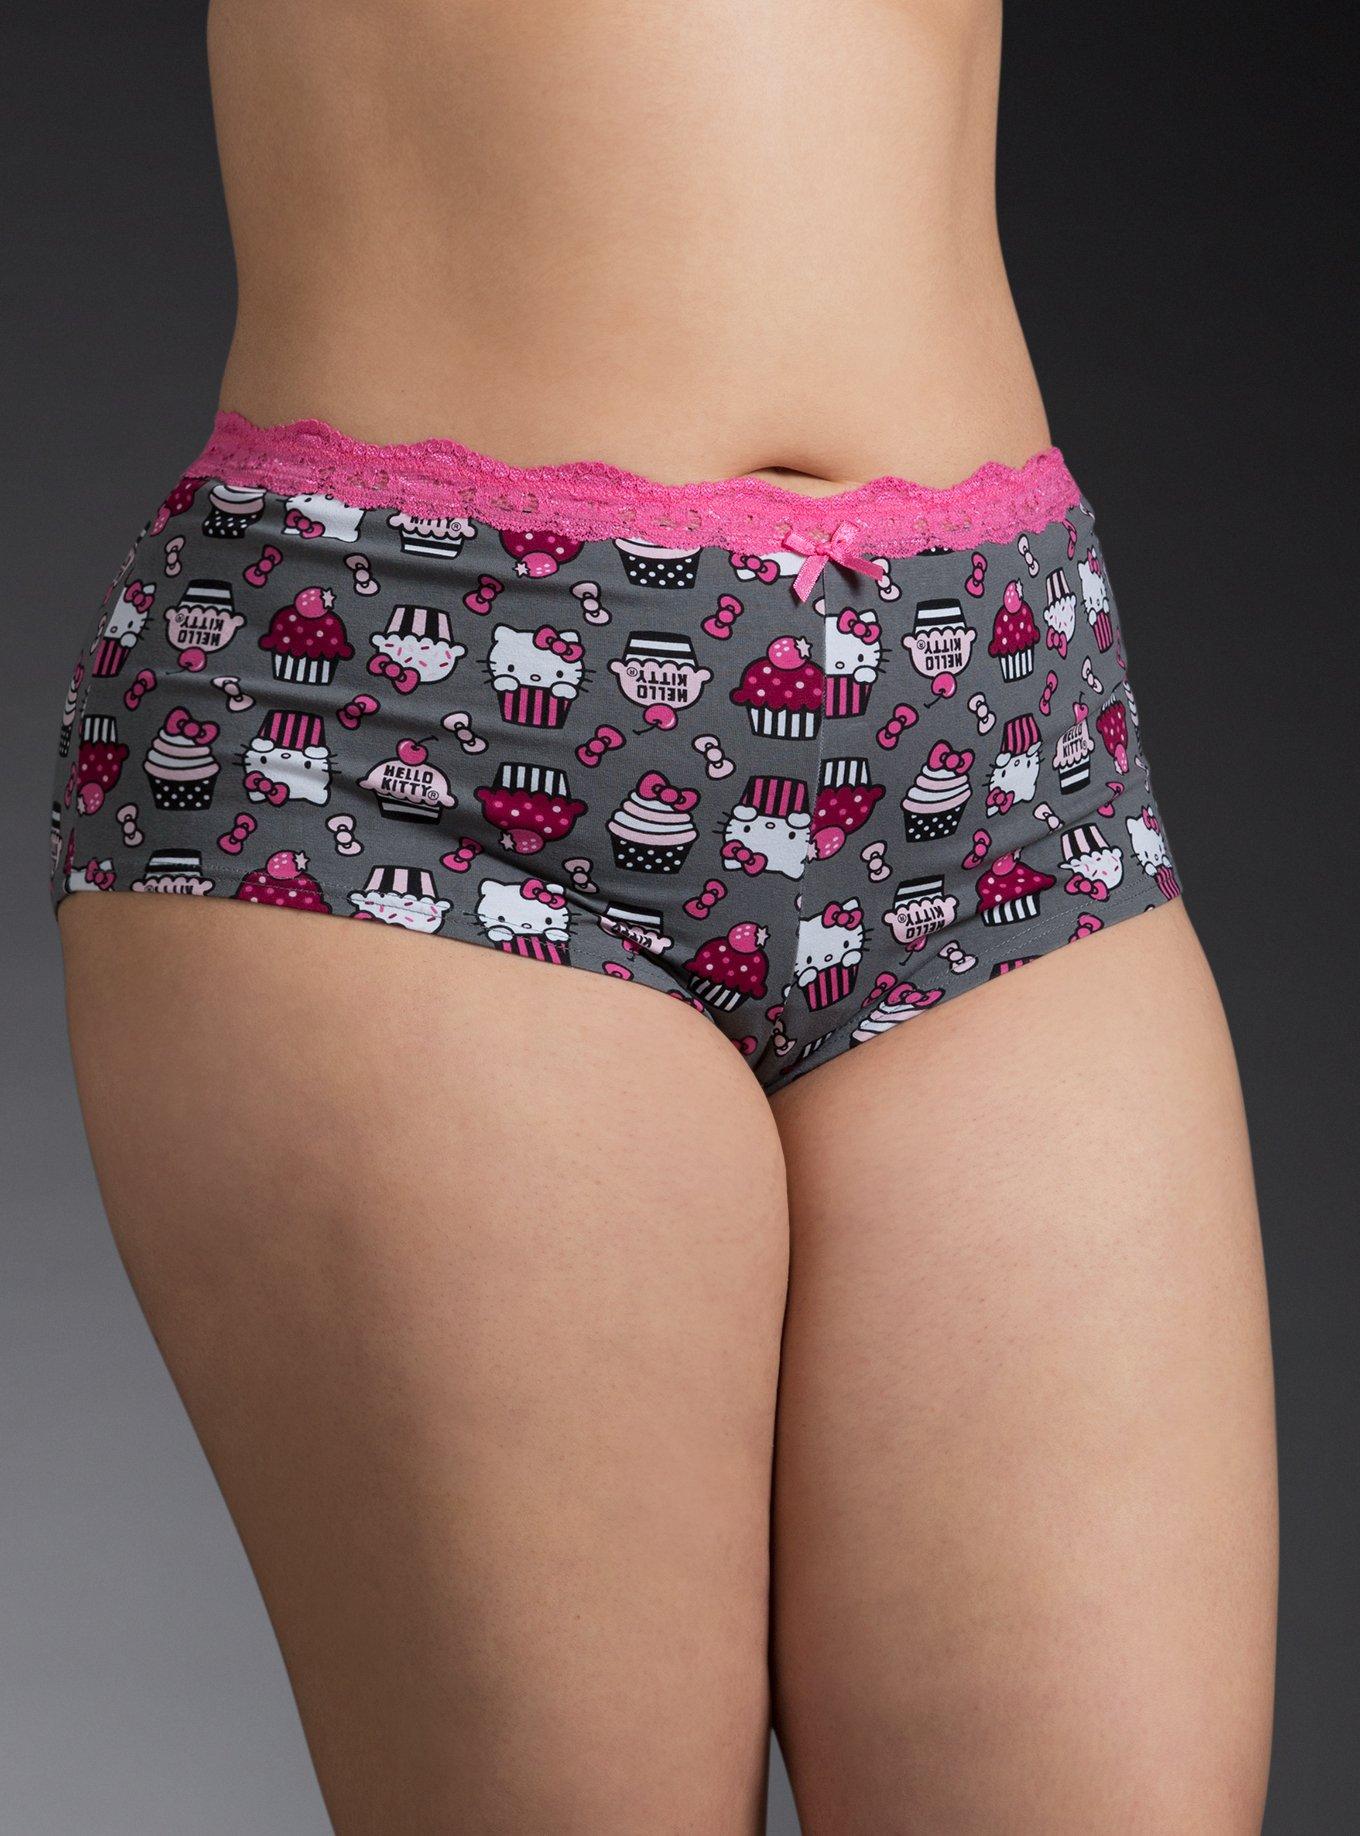 HELLO KITTY WOMENS Panties ~*~ THONG or CHEEKY Underwear Hipster Boyshorts  Panty $13.95 - PicClick